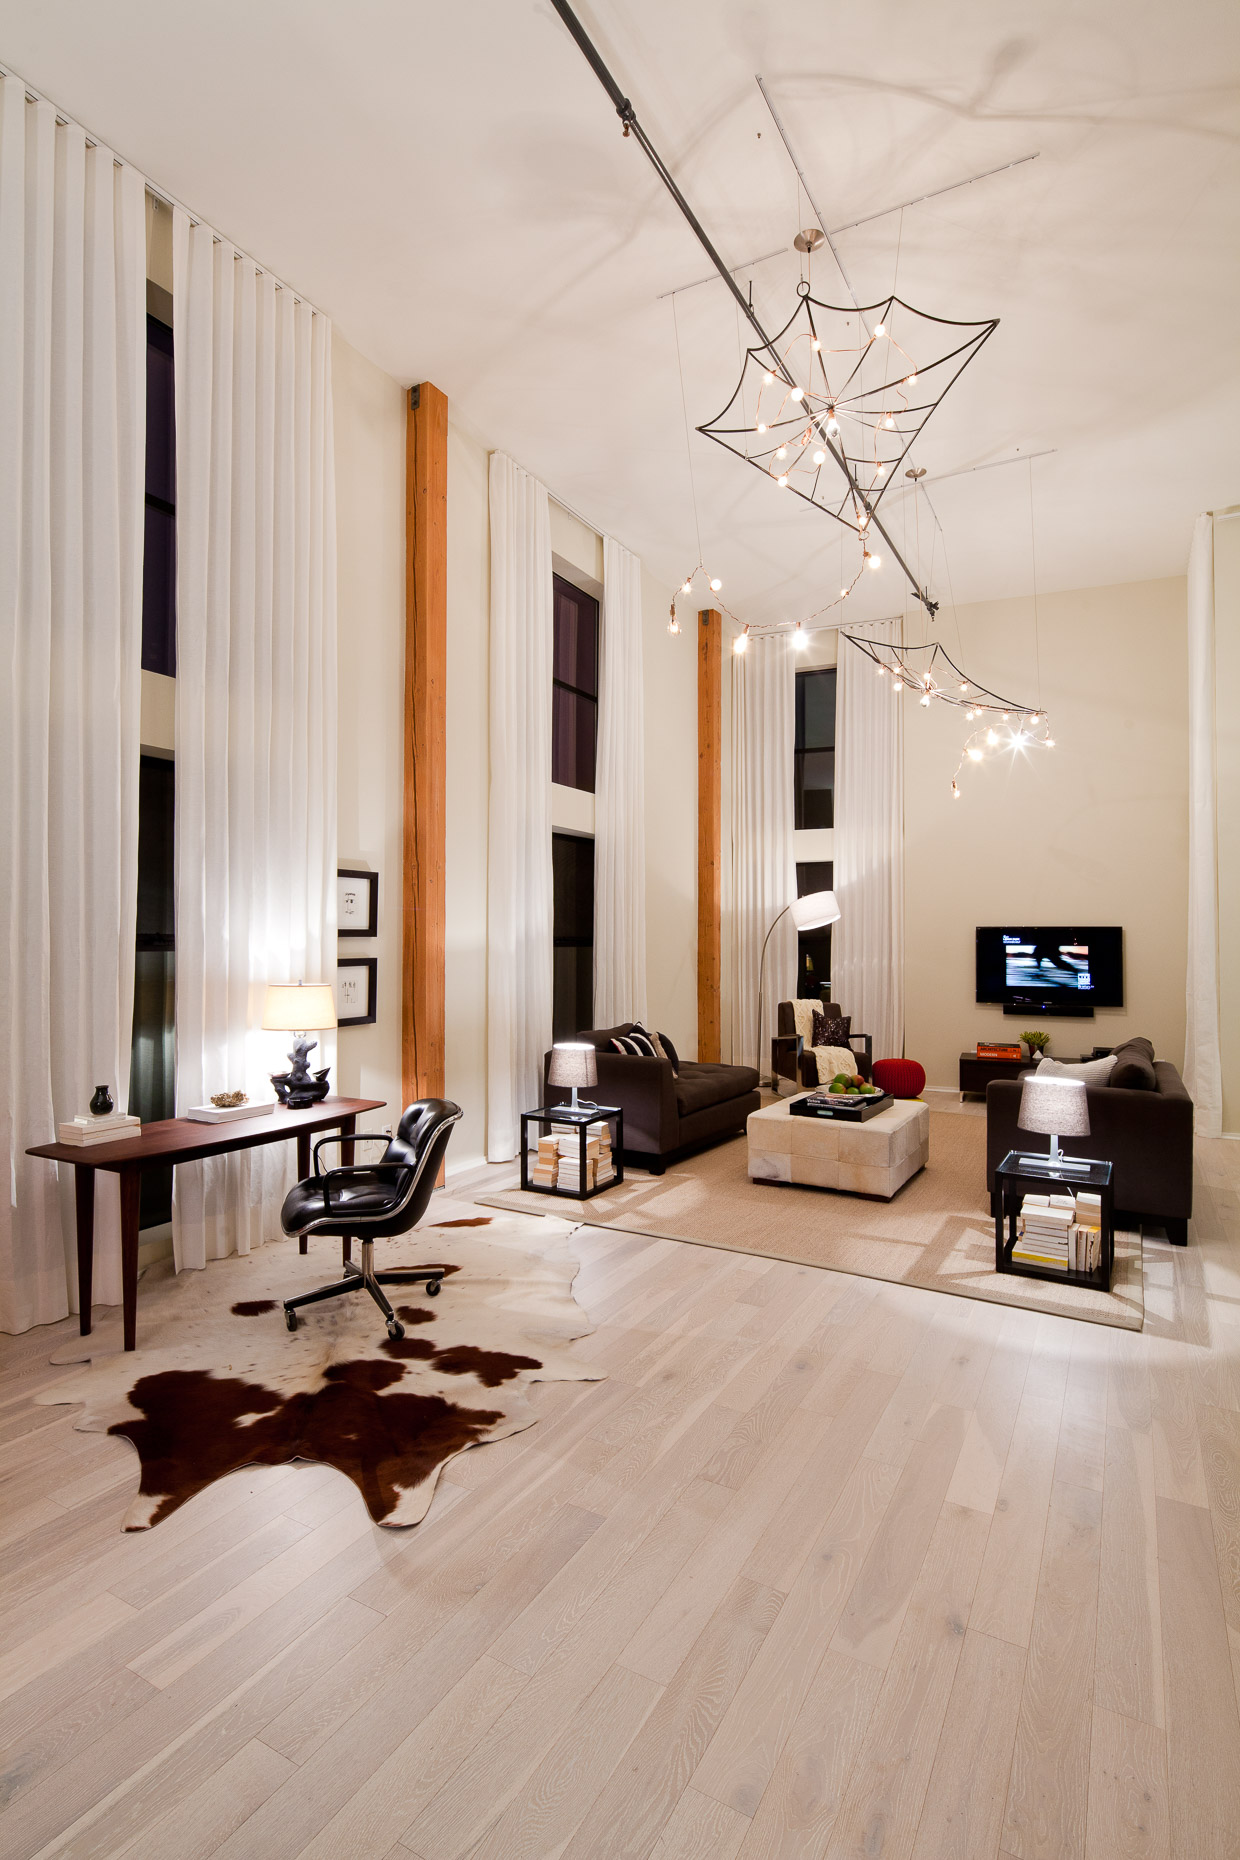 Interior architecture living room of modern loft residence in Los Angeles, California.  David Zaitz Photography.